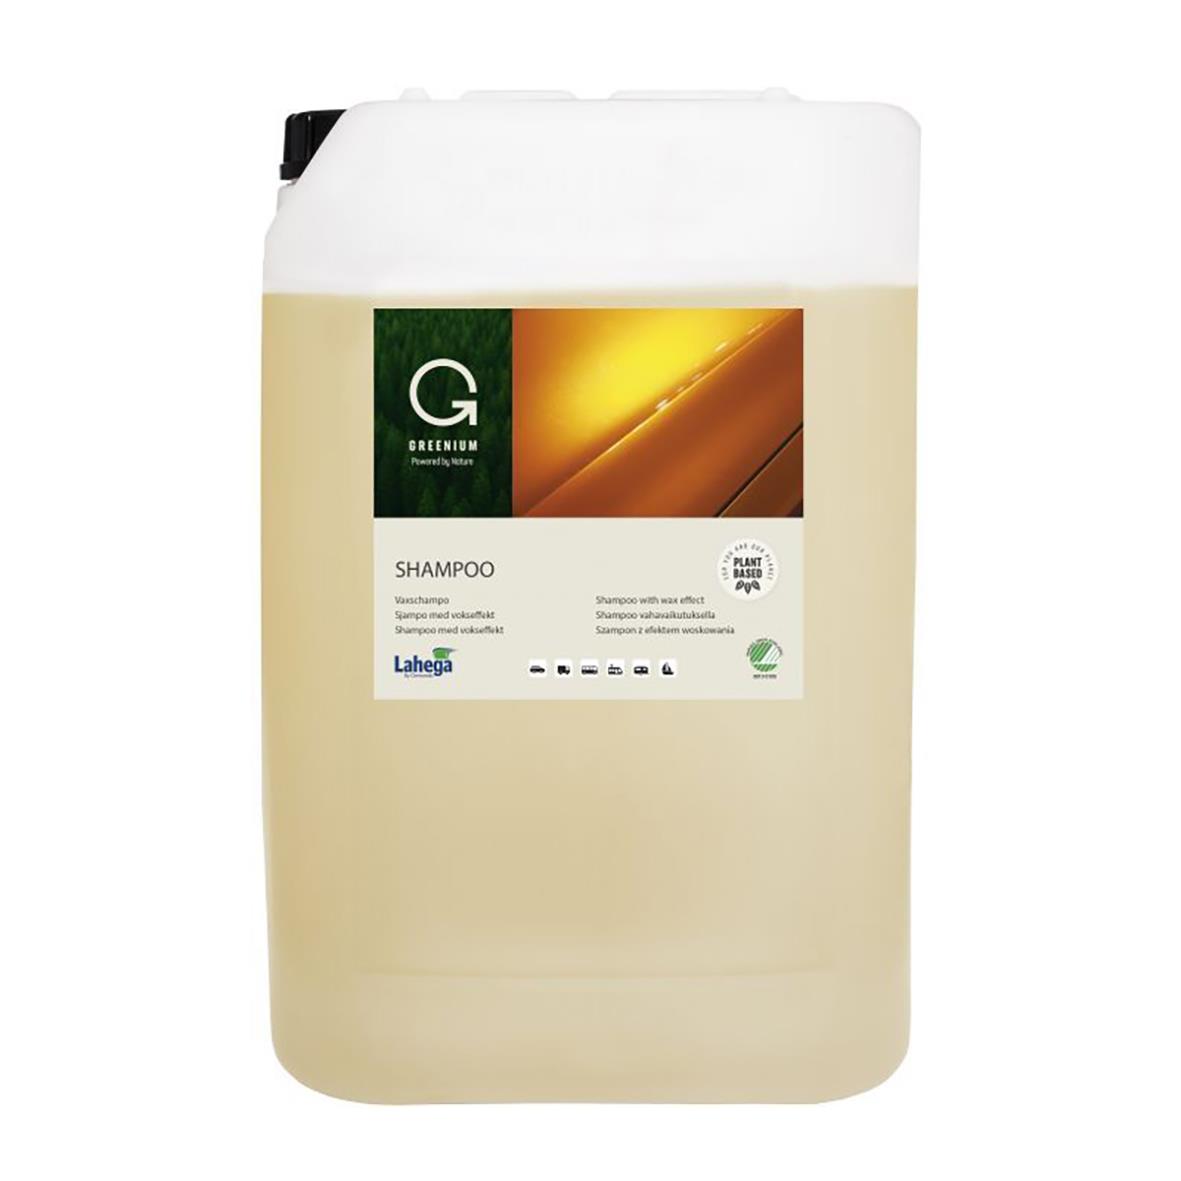 Shampoo Lahega Greenium 25L 52302641